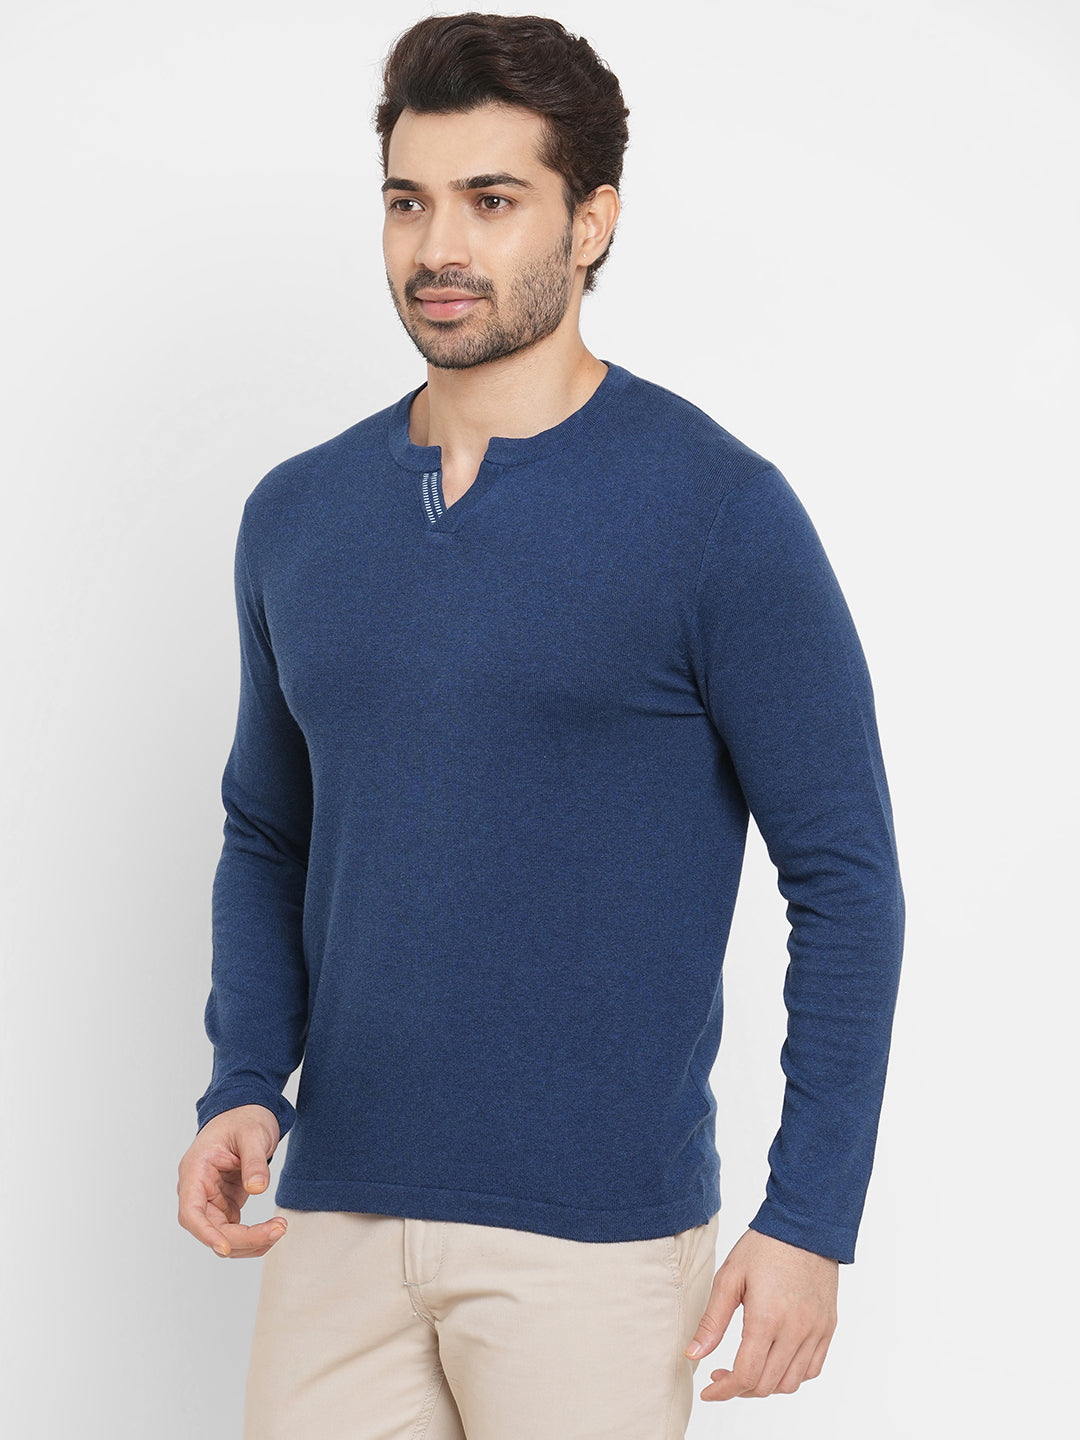 Men's Cotton Blend Navy Regular Fit long sleeved Tshirt